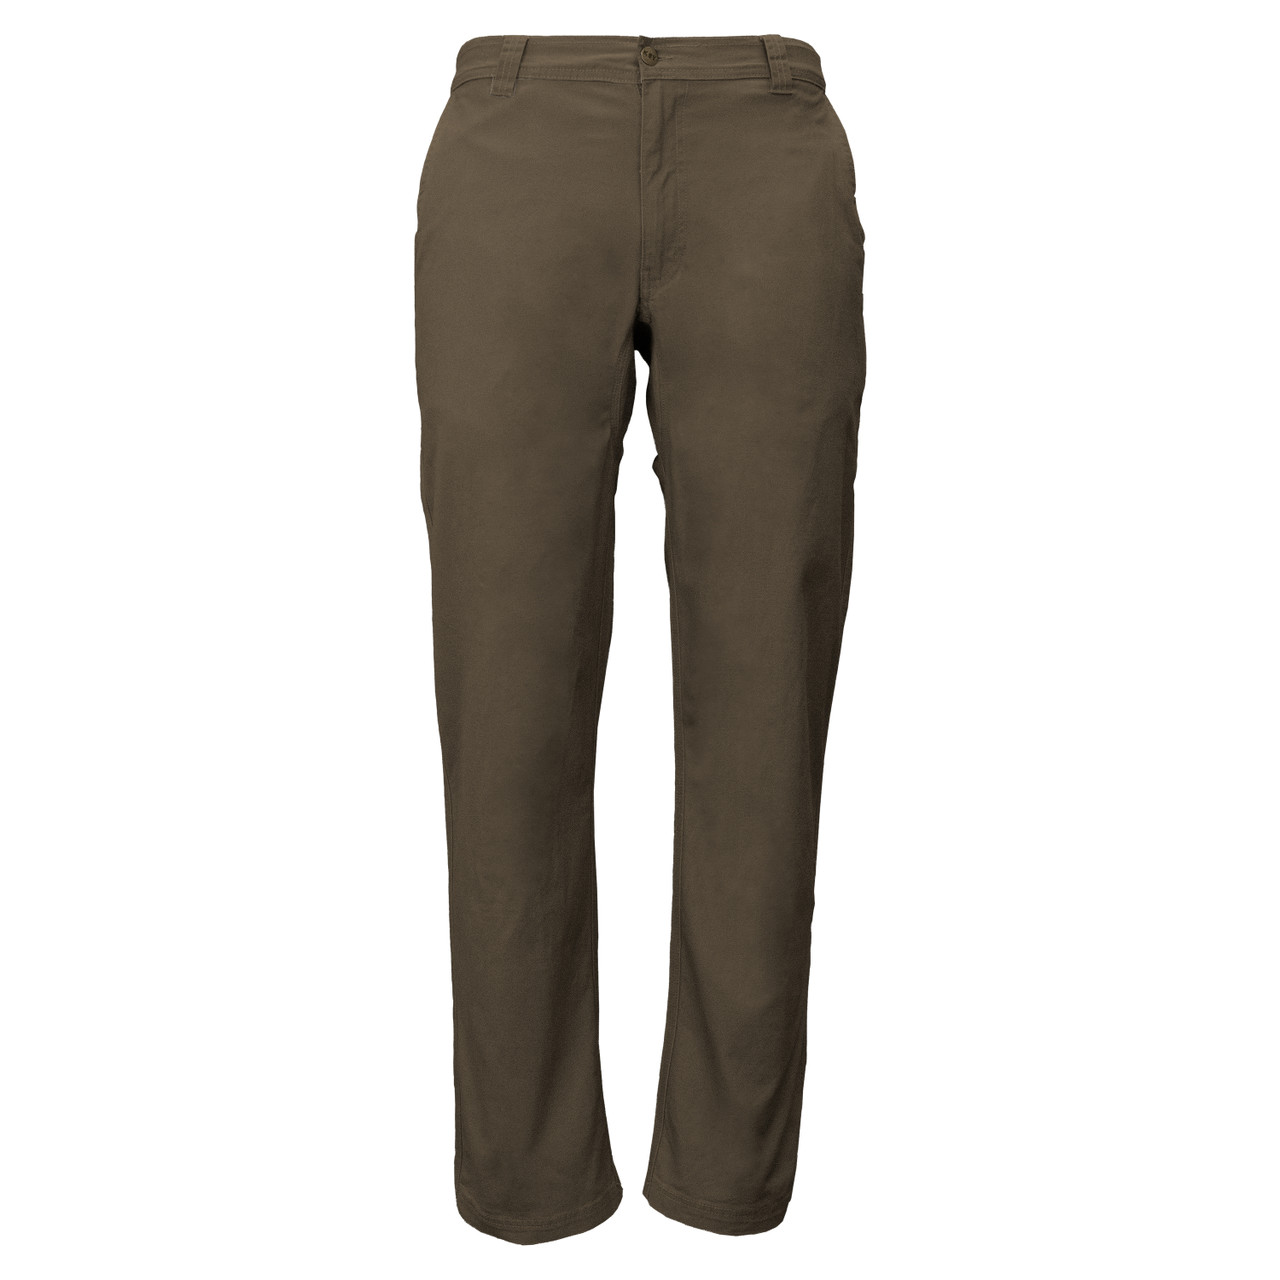 Slimtacular® Flex Fit Pants | Draper's & Damon's